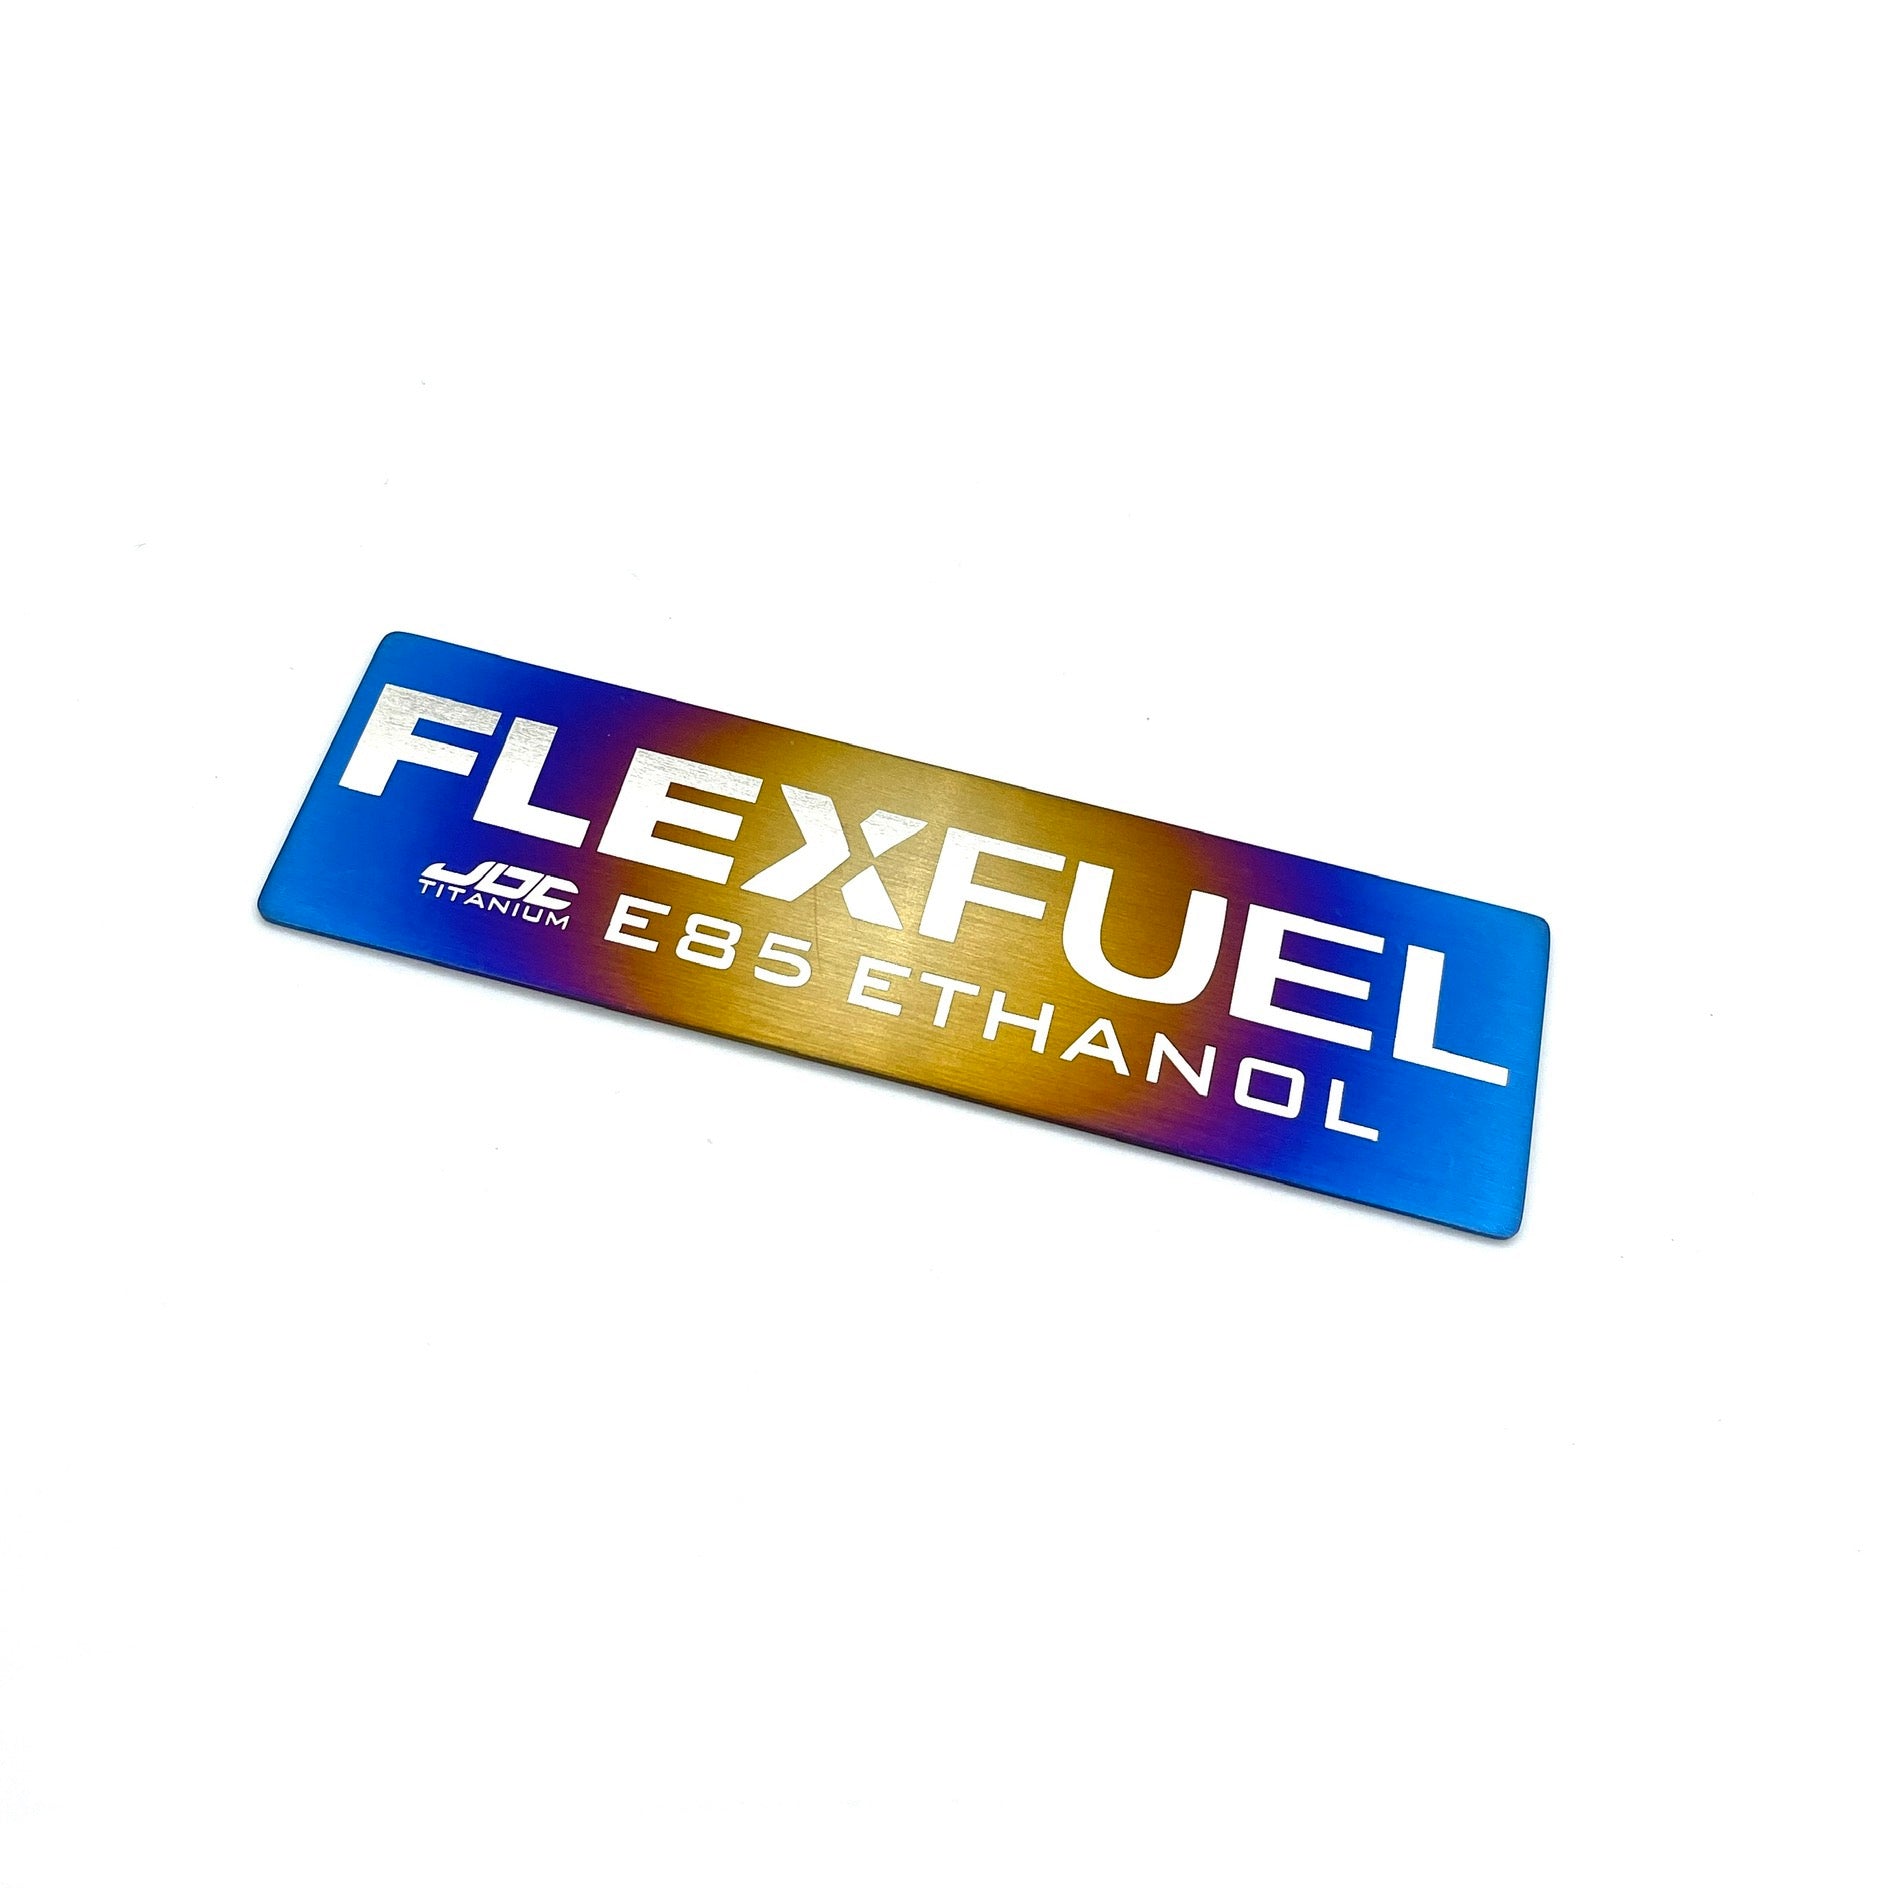 Insignia de combustible flexible/etanol JDC Titanium E85 (universal)